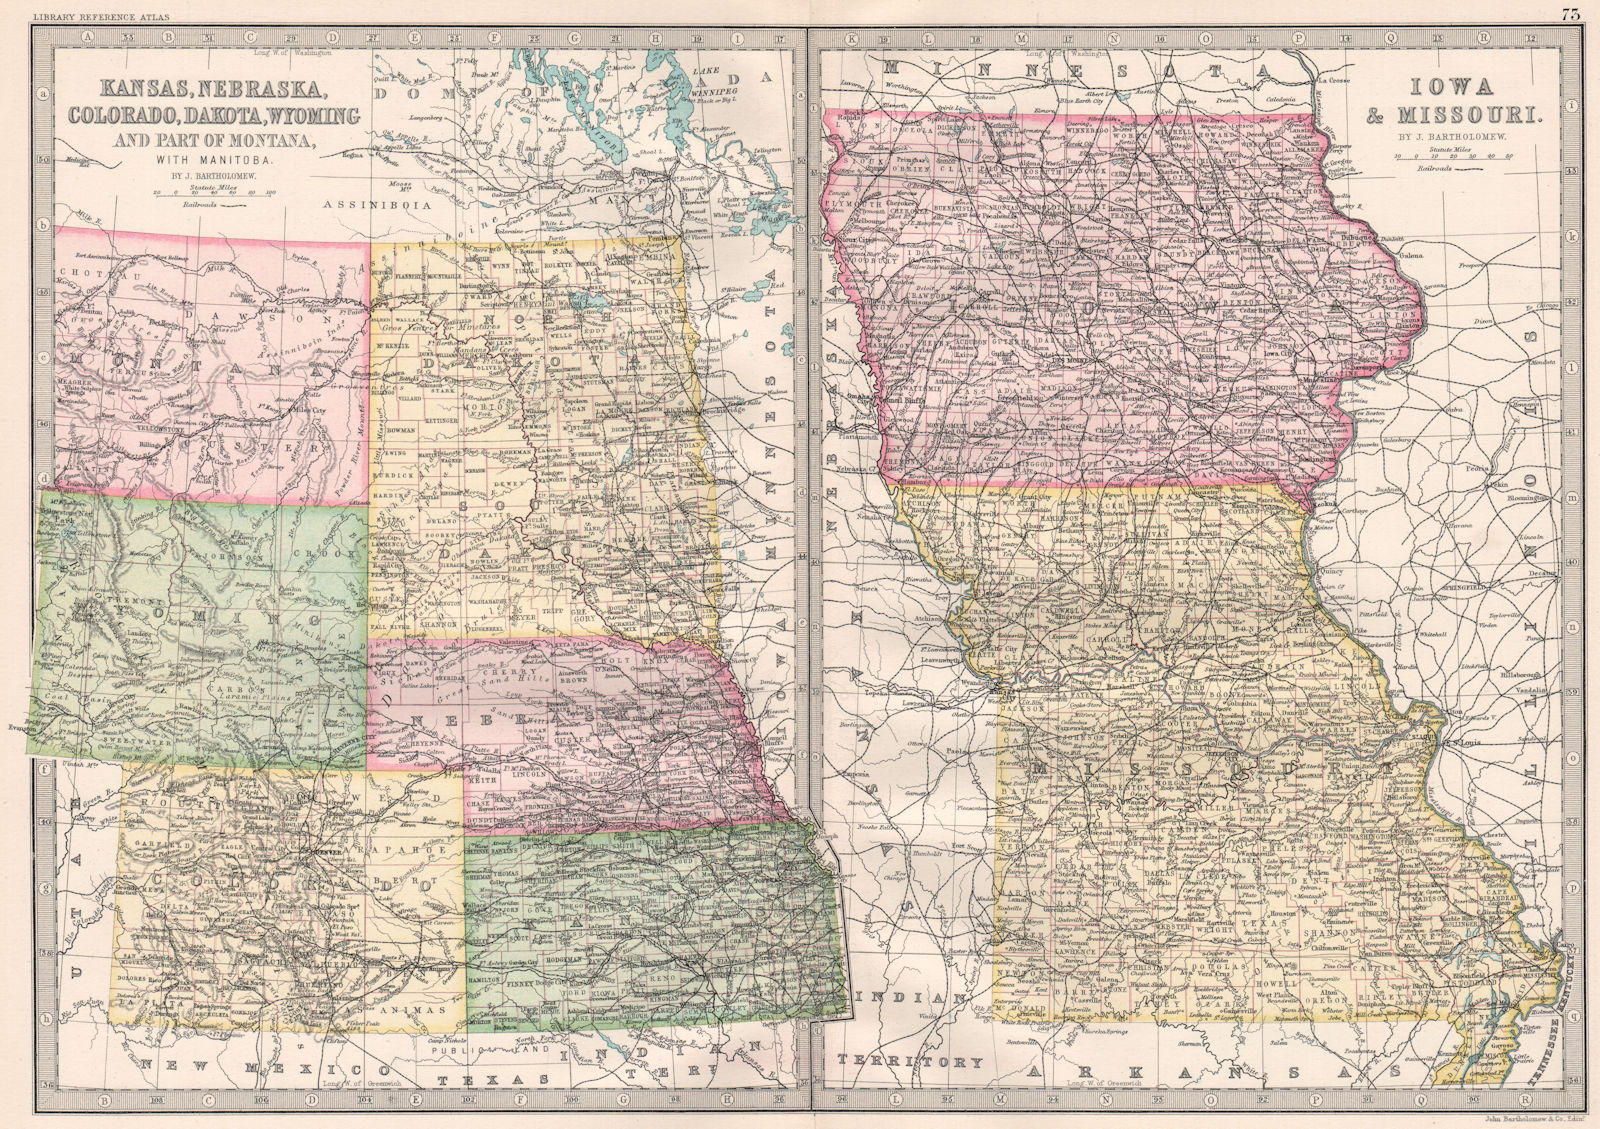 Associate Product MIDWESTERN USA. Kansas Nebraska Colorado Dakota WY MT Iowa Missouri 1890 map